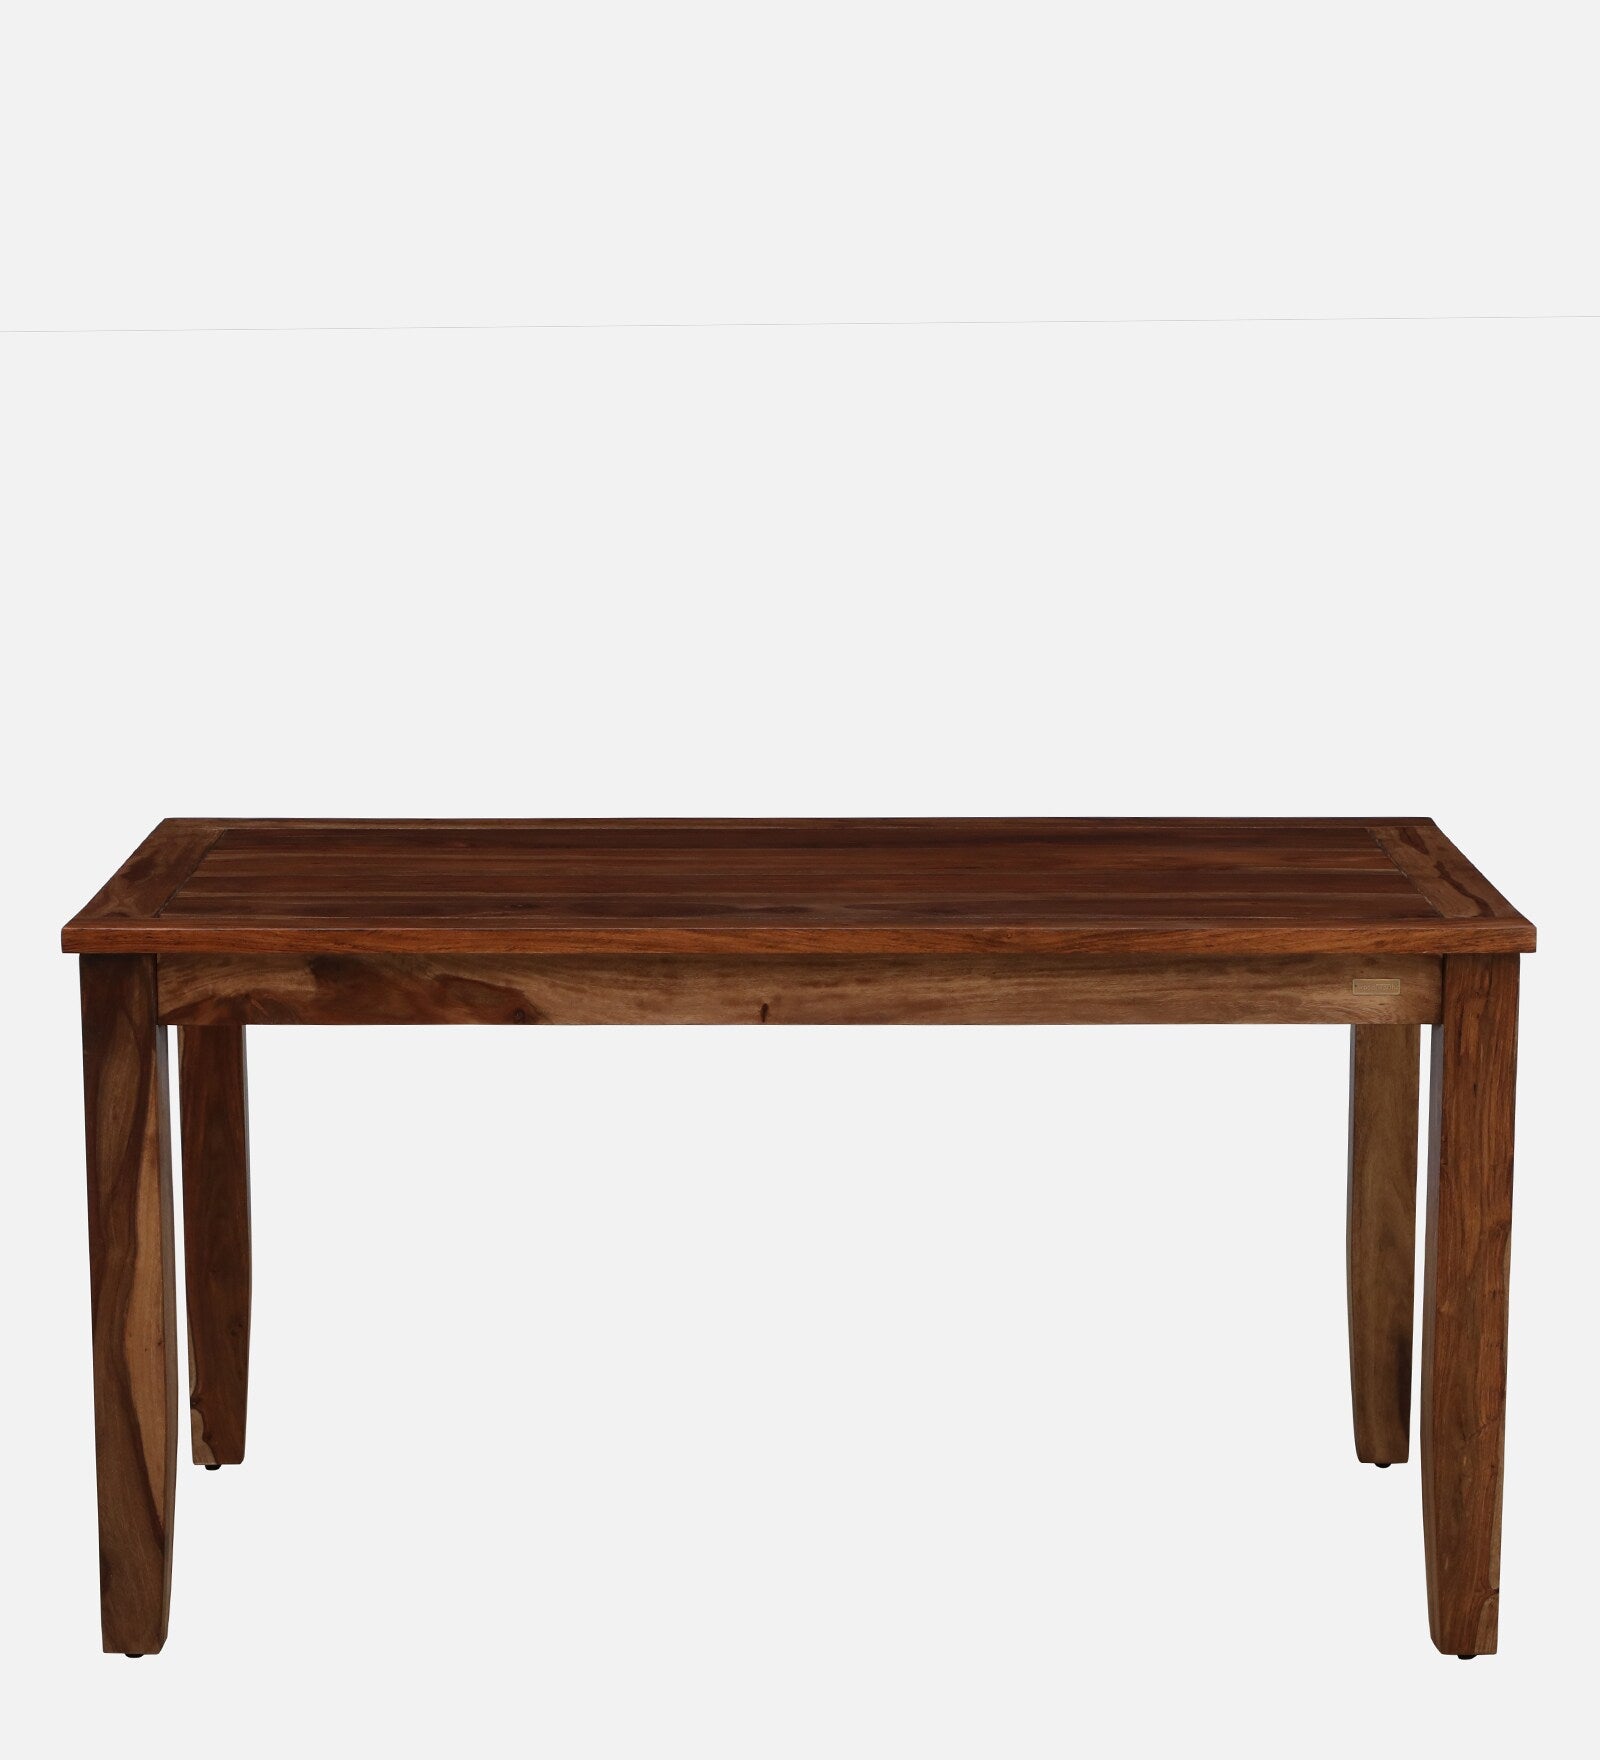 Elista Solid Wood 6 Seater Dining Table in Rustic Teak Finish By Rajwada - Rajwada Furnish